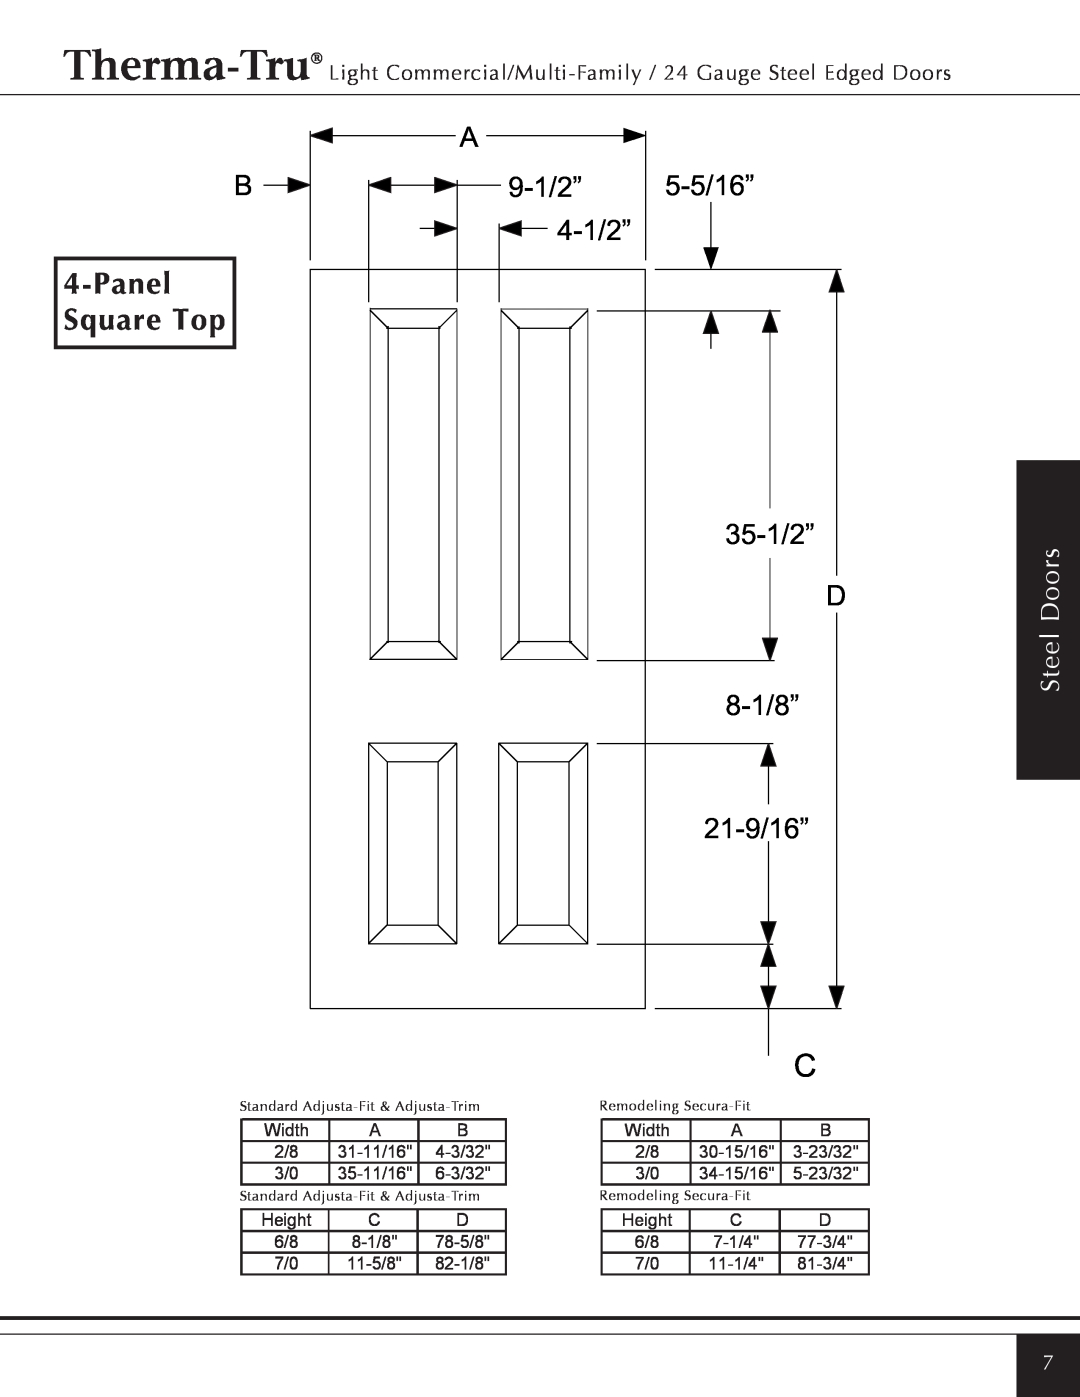 Therma-Tru Light Commercial/Multi-Family / 22 & 24 Gauge Steel Edged Door manual PanelSquare Top, 9-1/2”, 5-5/16”, 4-1/2” 